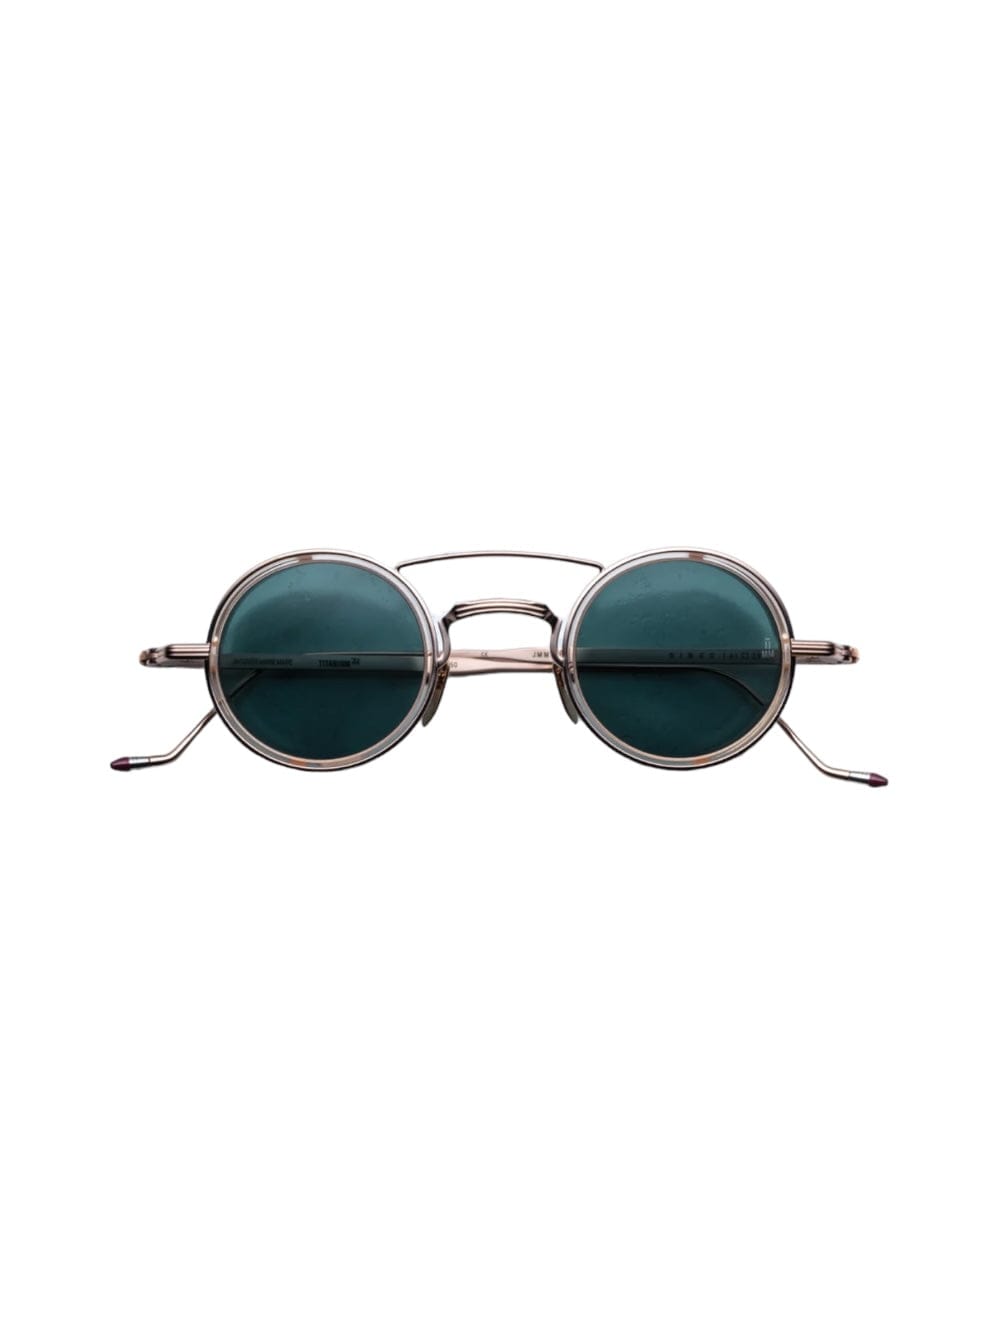 Jacques Marie Mage Ringo - Dahlia Sunglasses In Blue